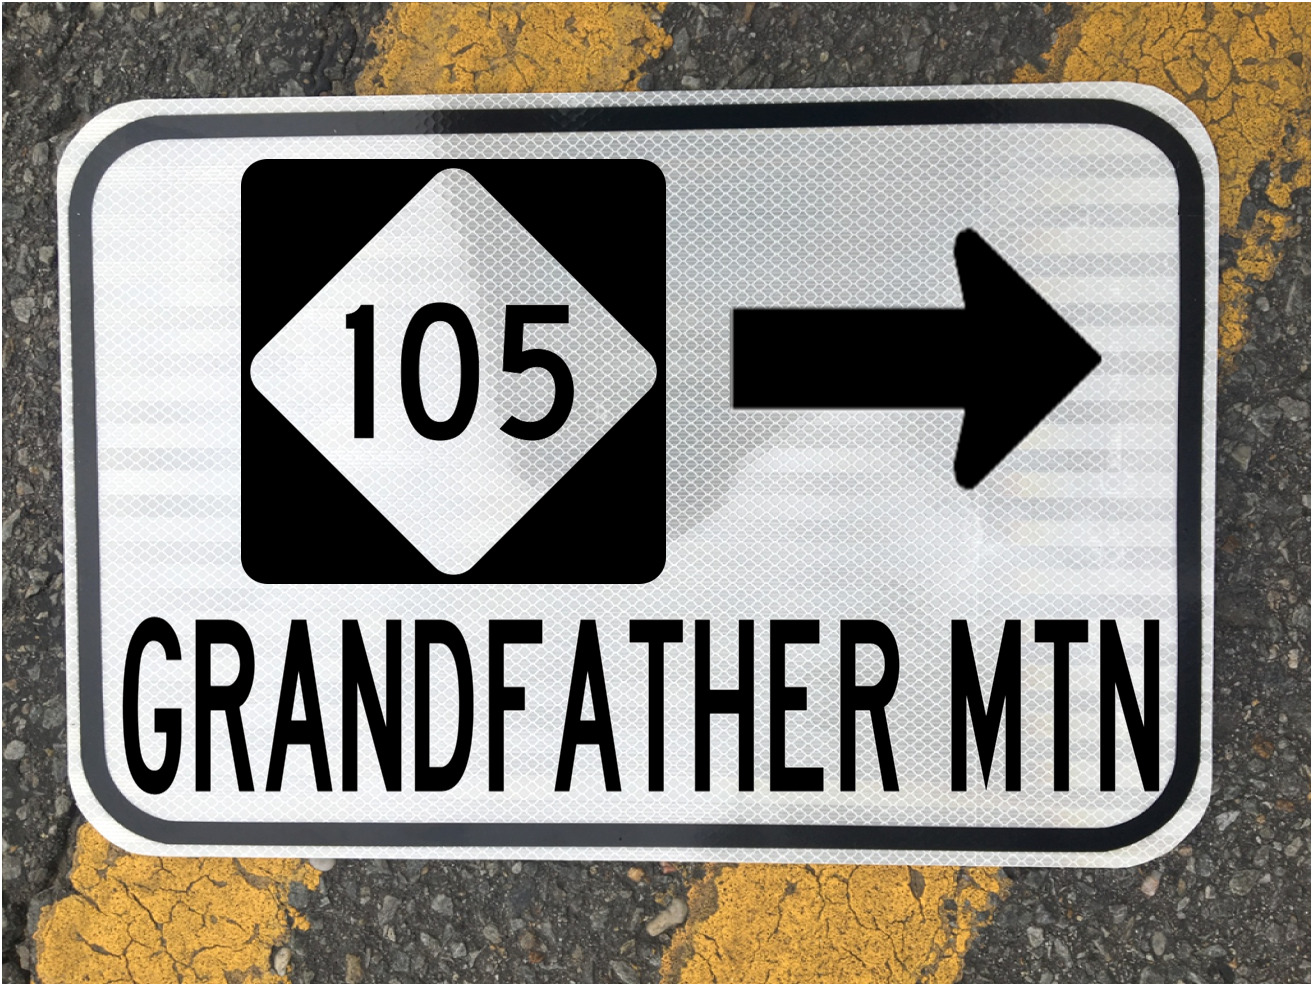 GRANDFATHER MOUNTAIN NORTH CAROLINA Hwy 105 road sign 12\